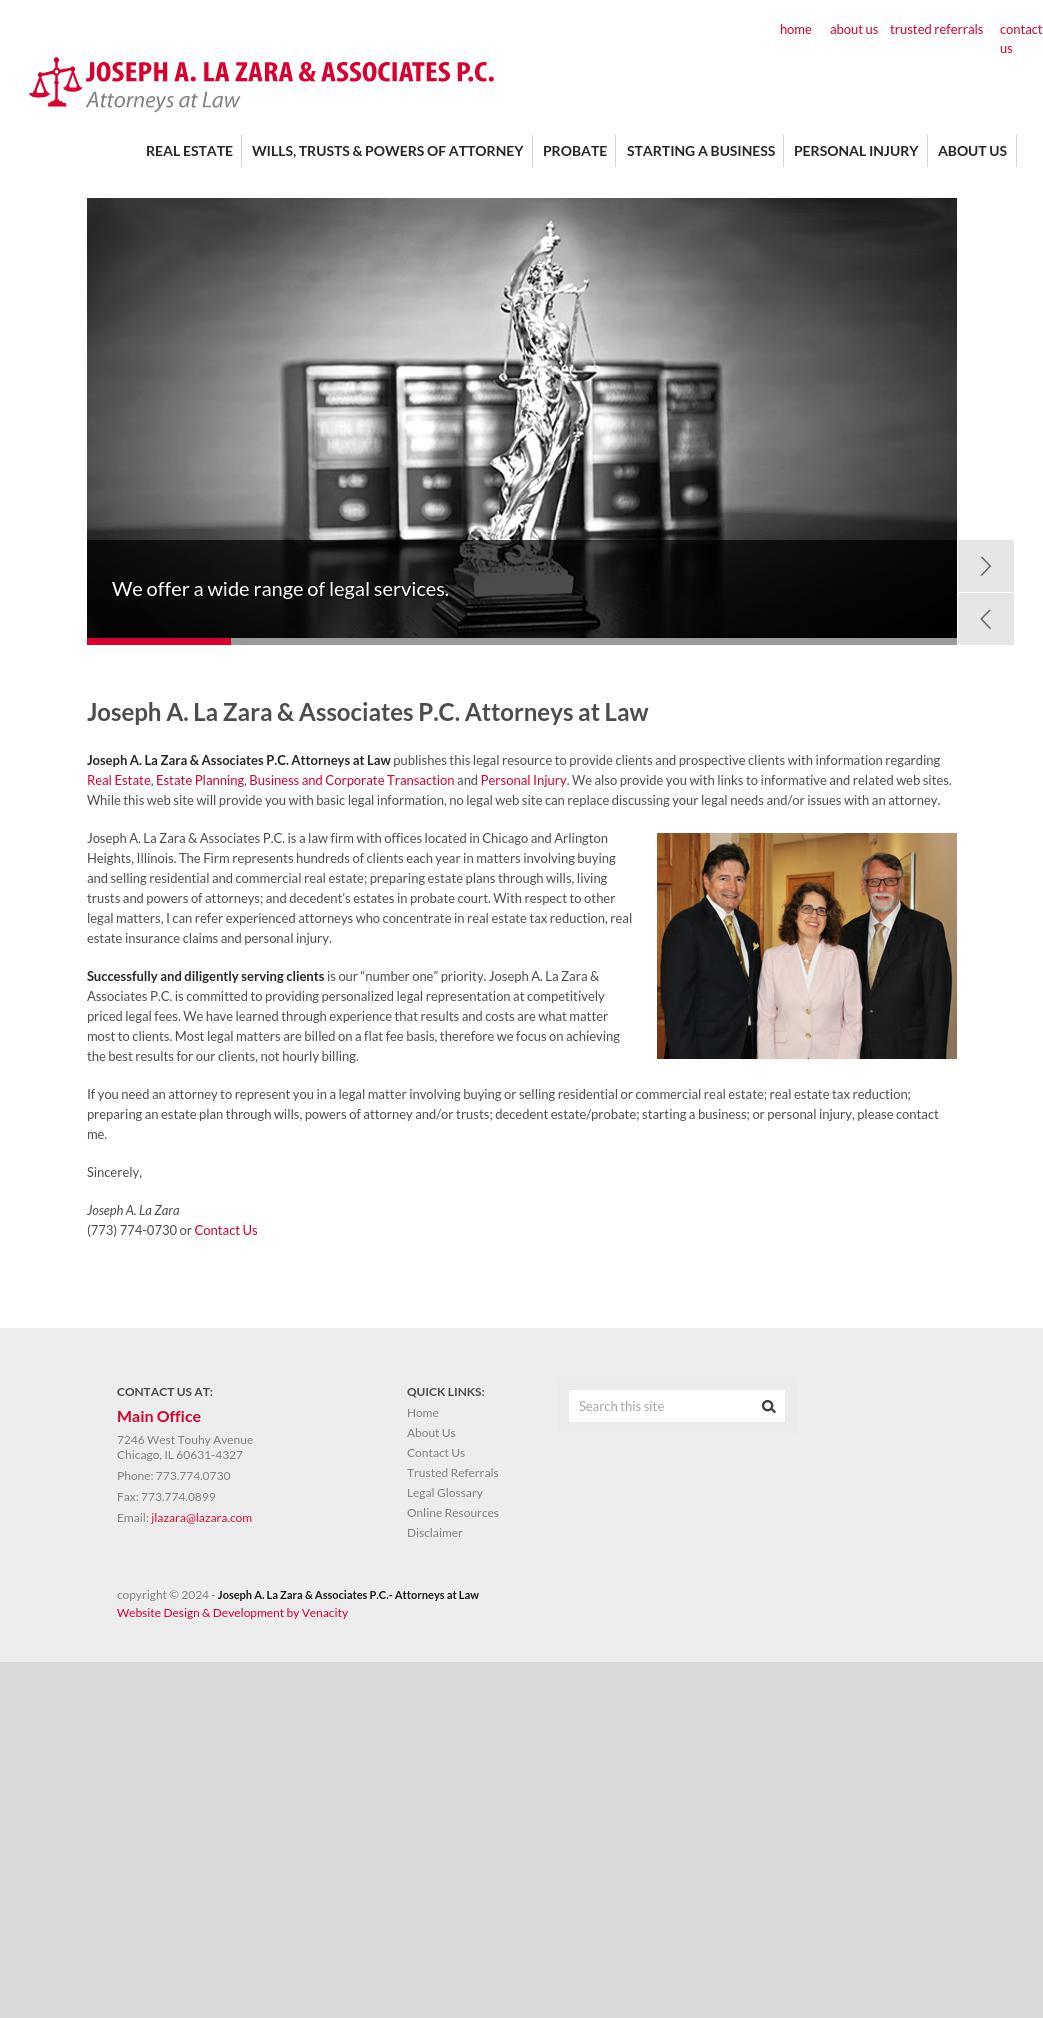 Joseph A. La Zara & Associates P.C. Attorneys at Law - Chicago IL Lawyers